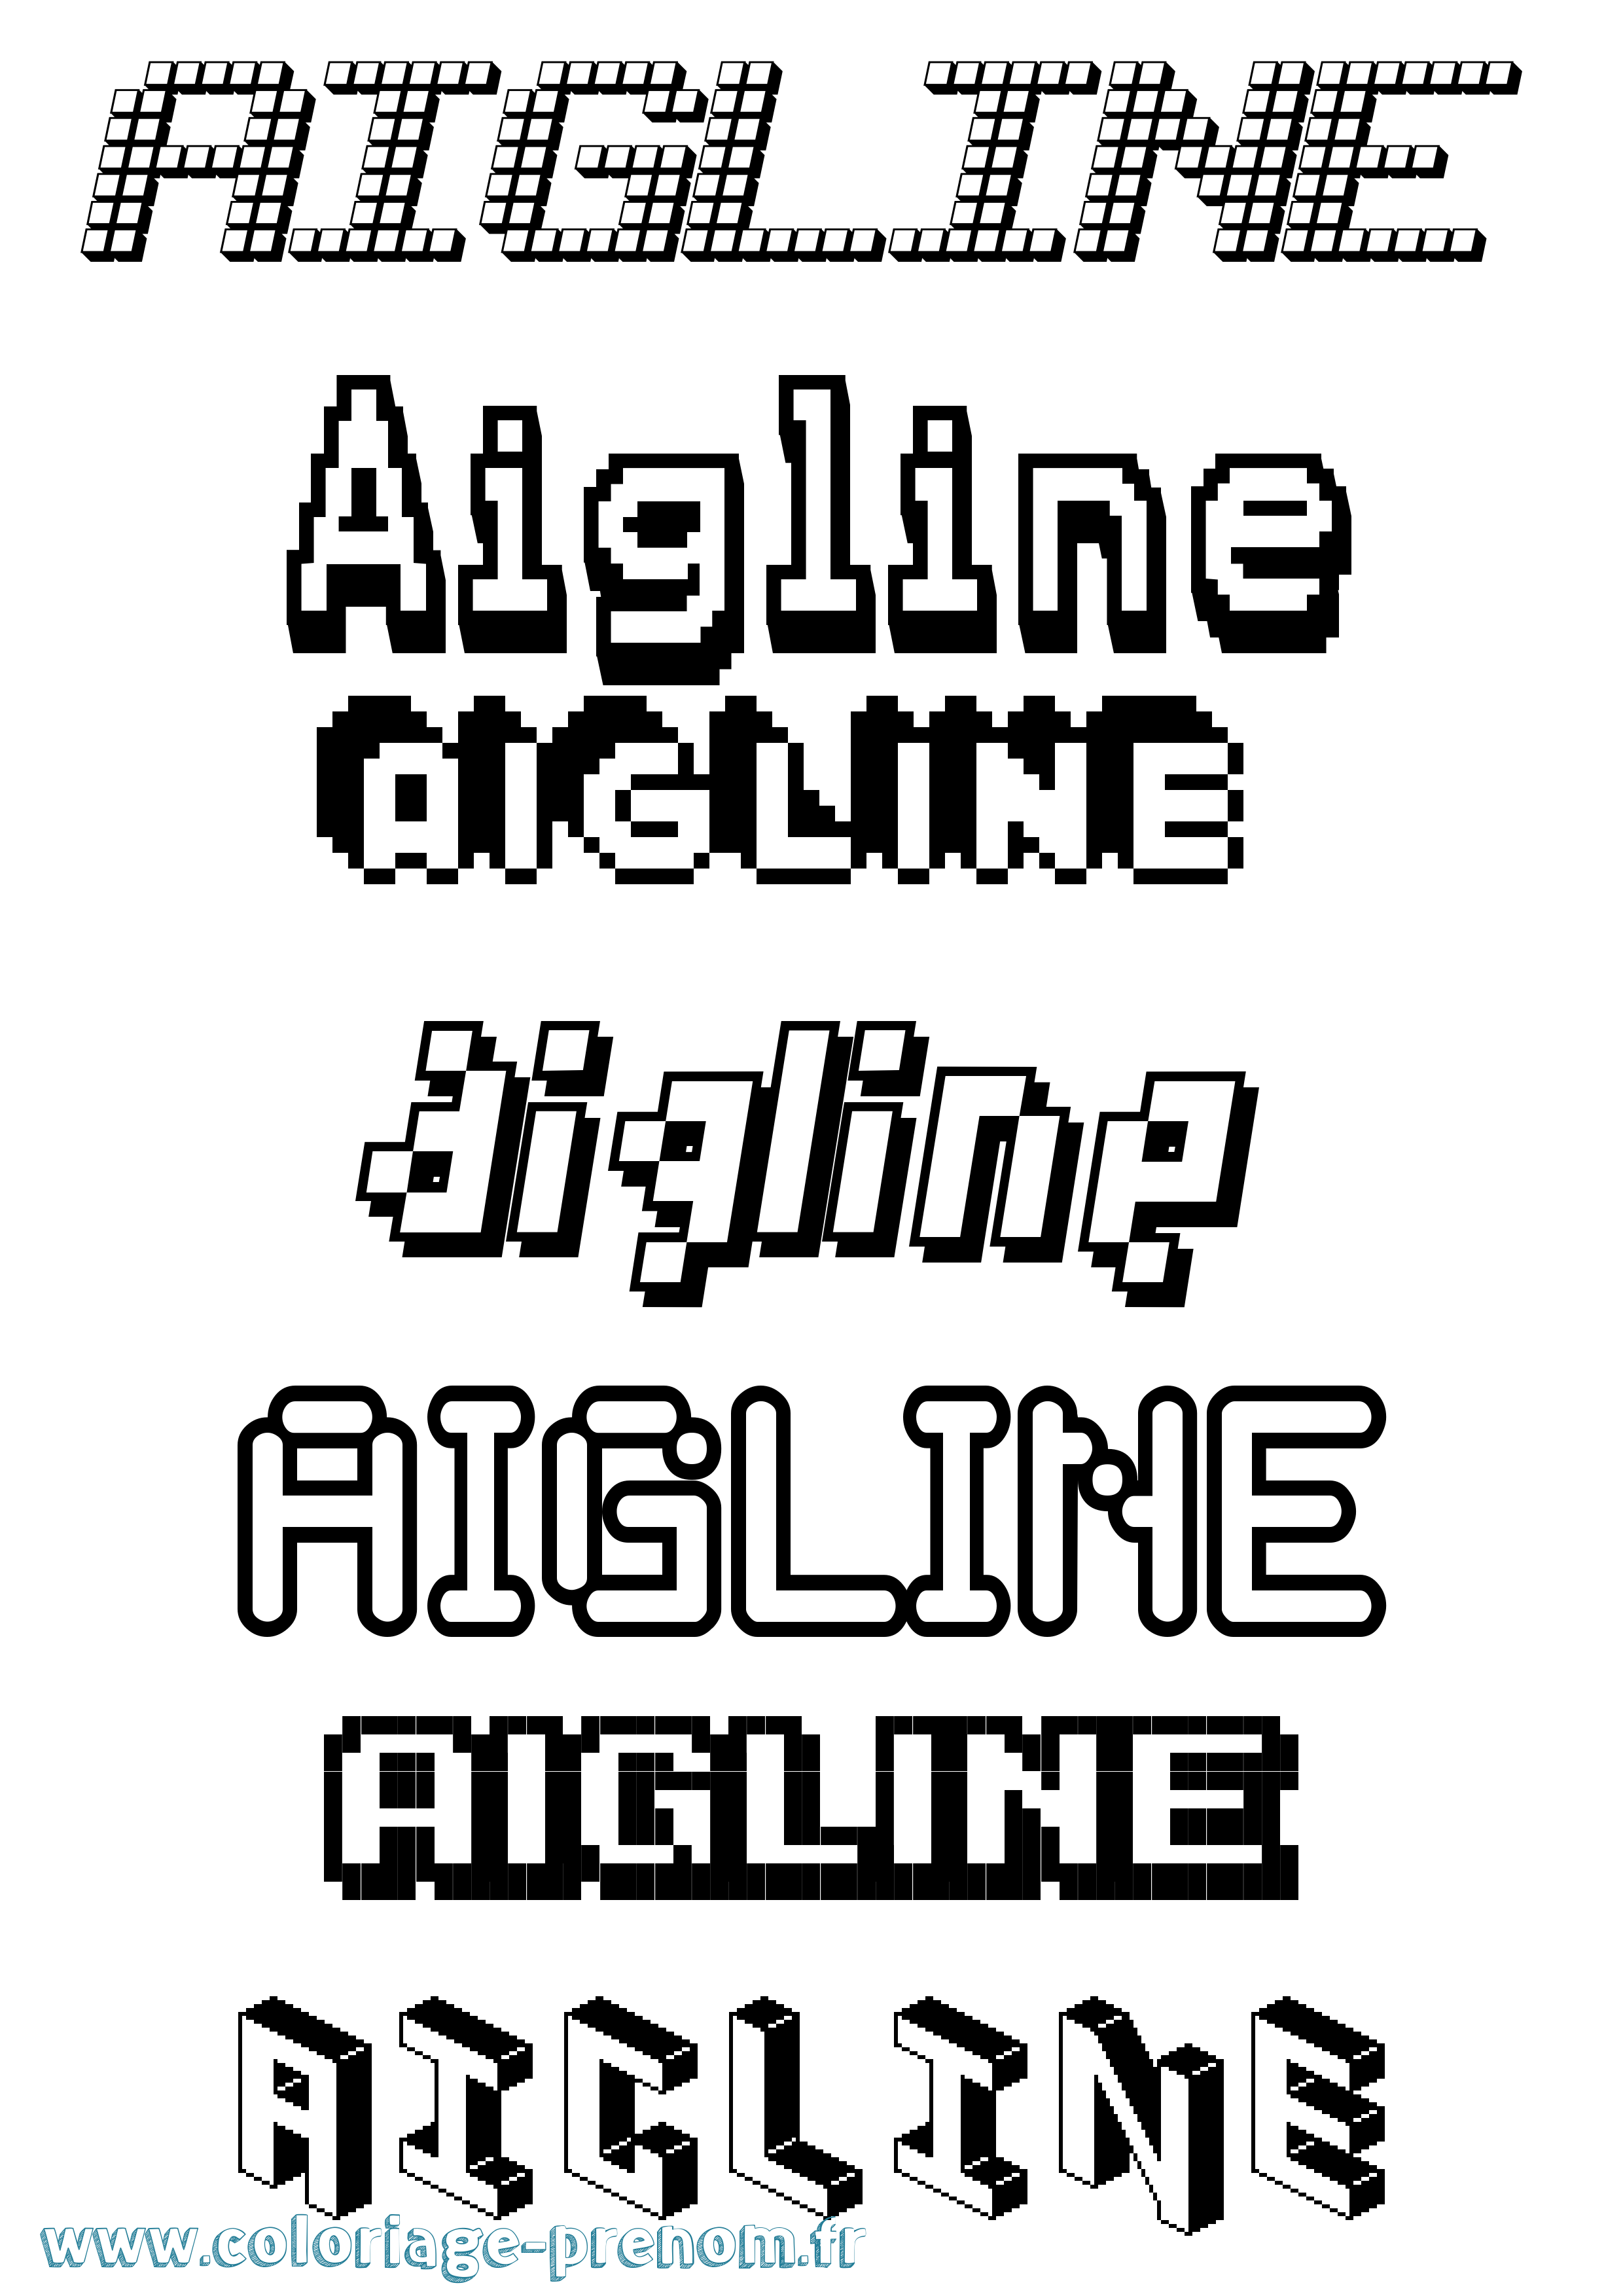 Coloriage prénom Aigline Pixel